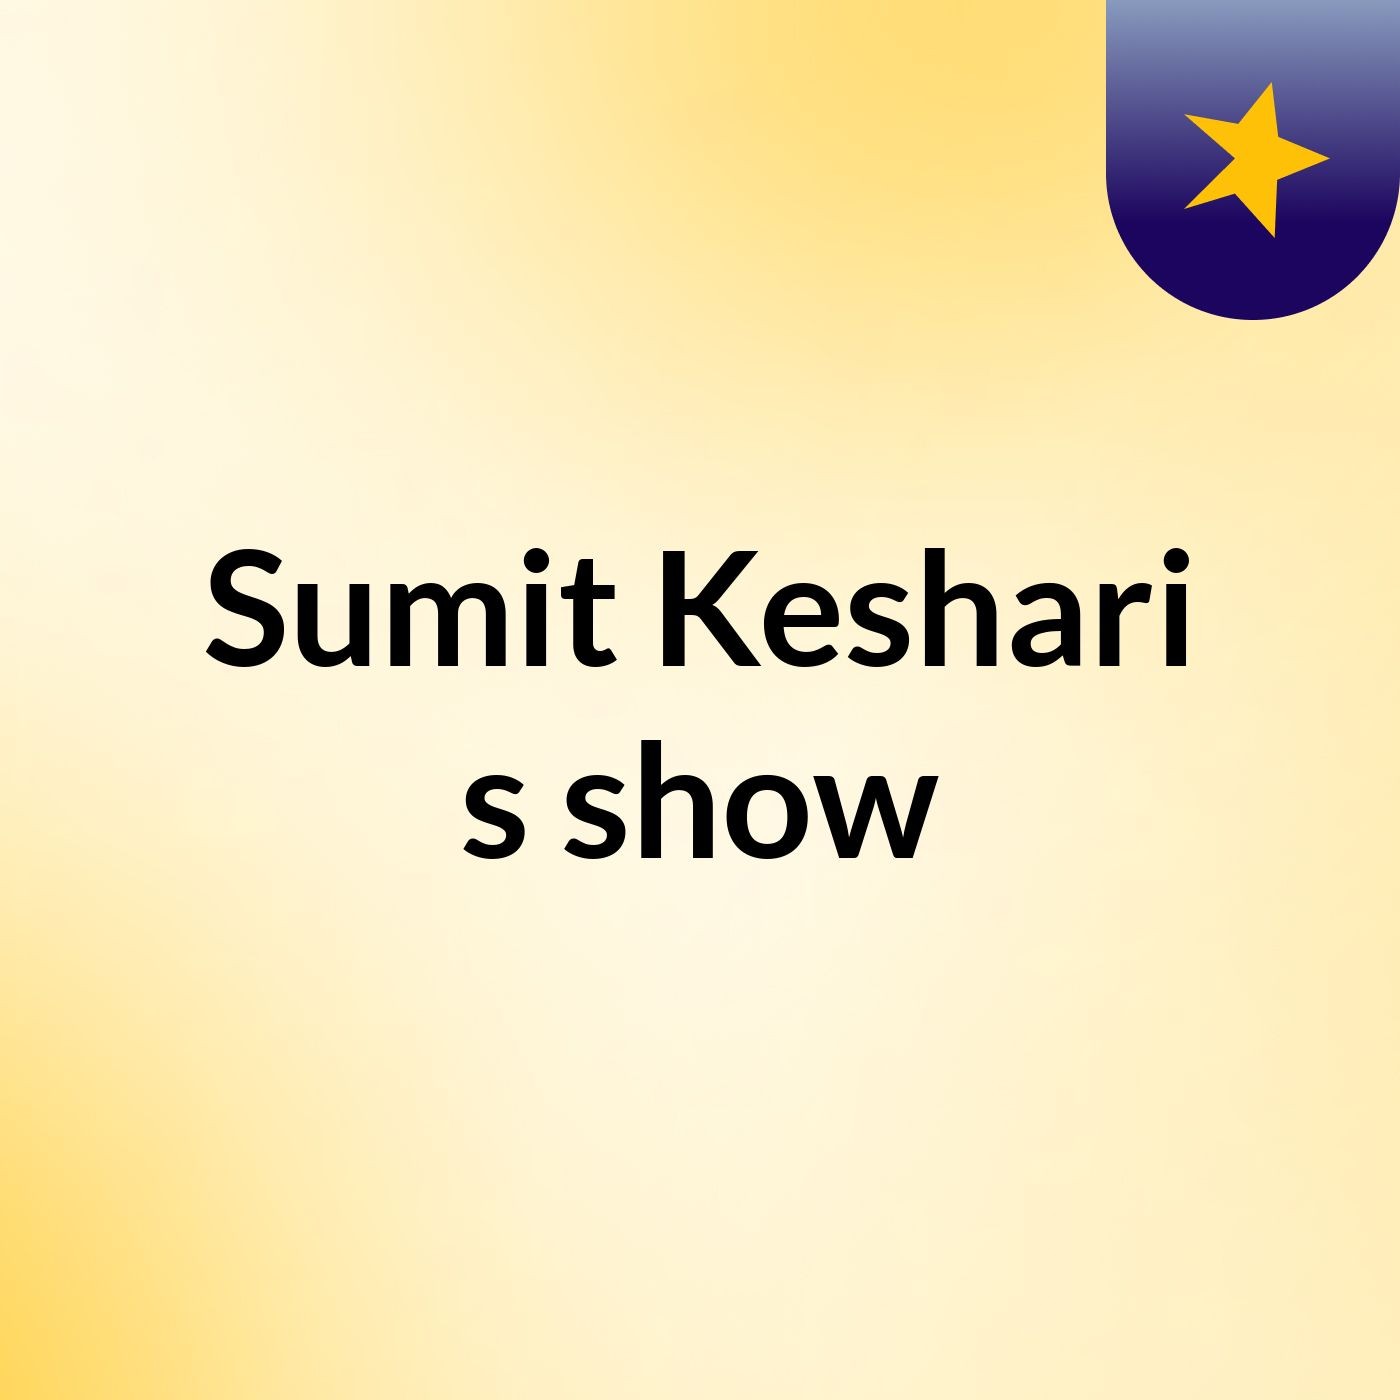 Sumit Keshari's show